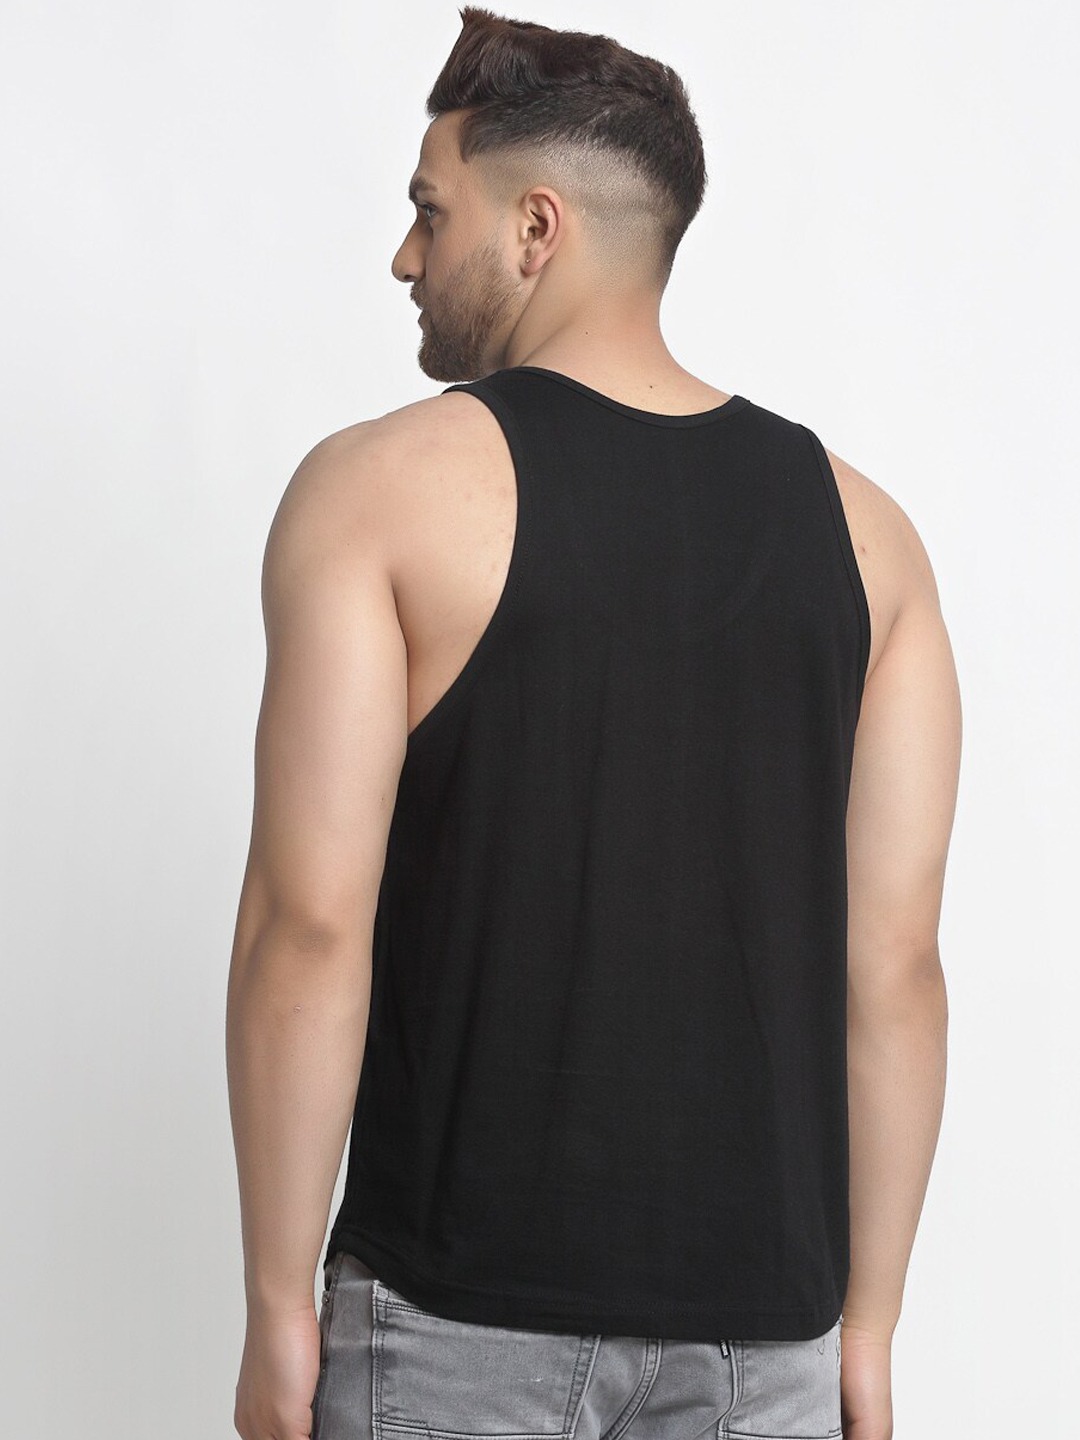 Clothing Innerwear Vests | Friskers Men Black & White Panda Printed Pure Cotton Gym Vest - GE16629